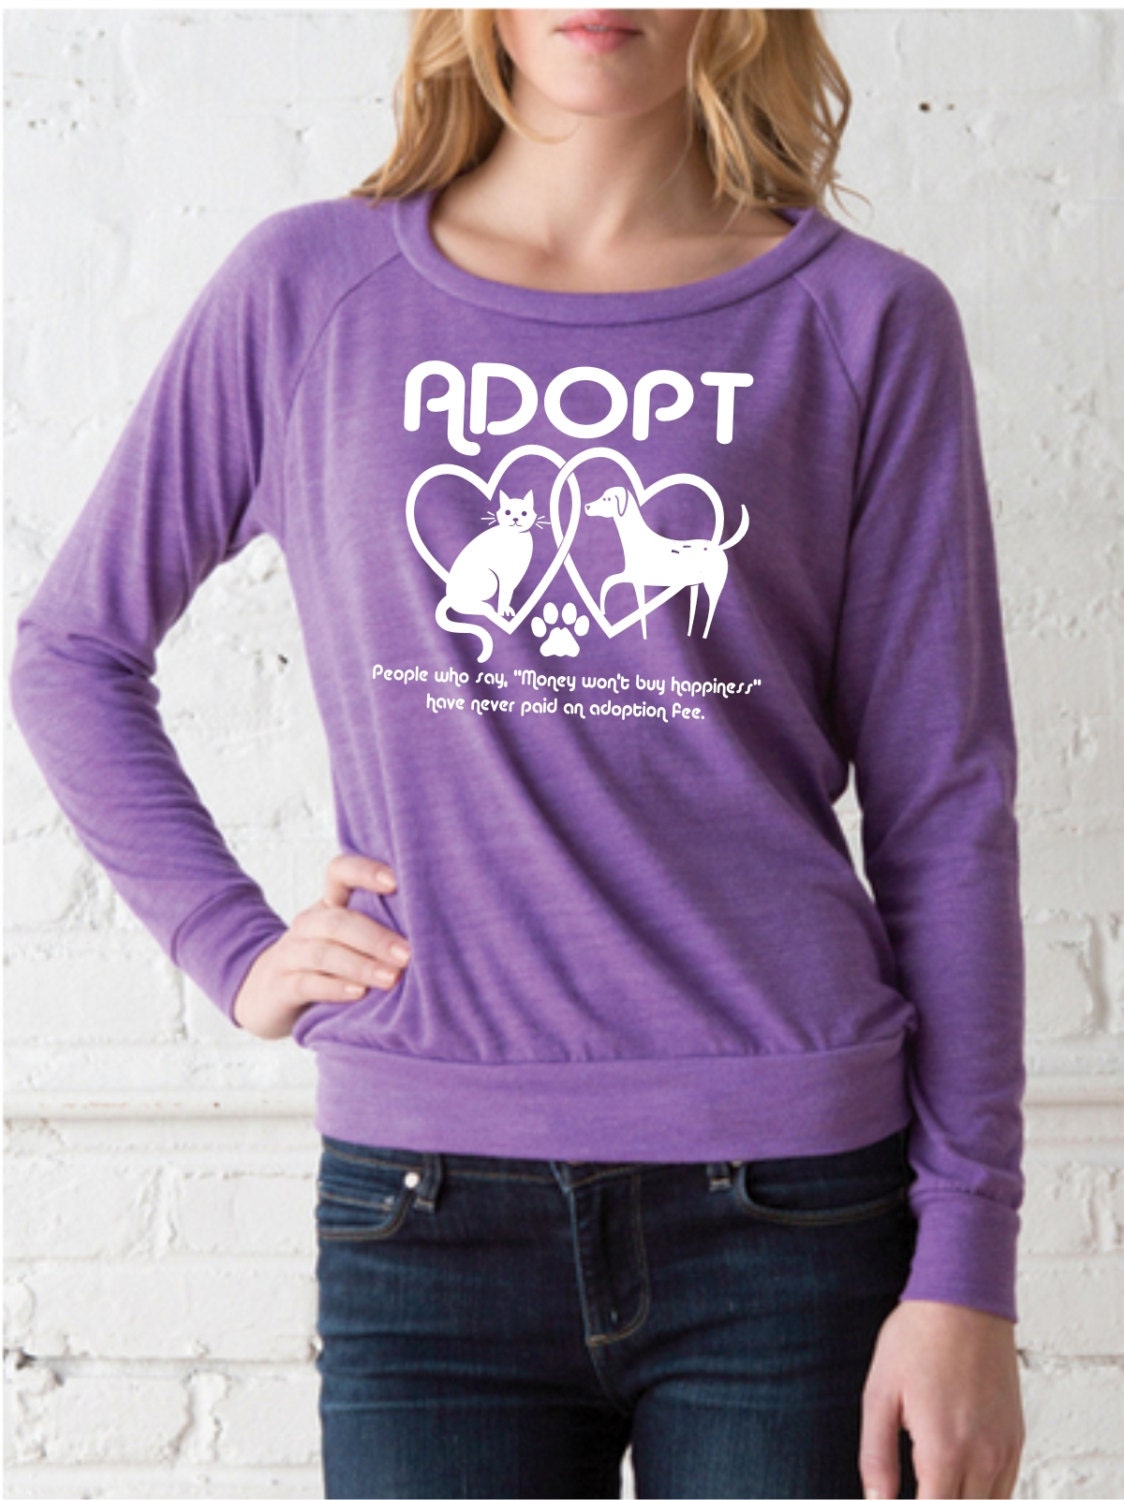 Animal Rescue shirt / Adopt tshirt / Slouchy Raglan Pullover / Radiant Orchid / Womens Long Sleeve / cat shirt / dog shirt / purple